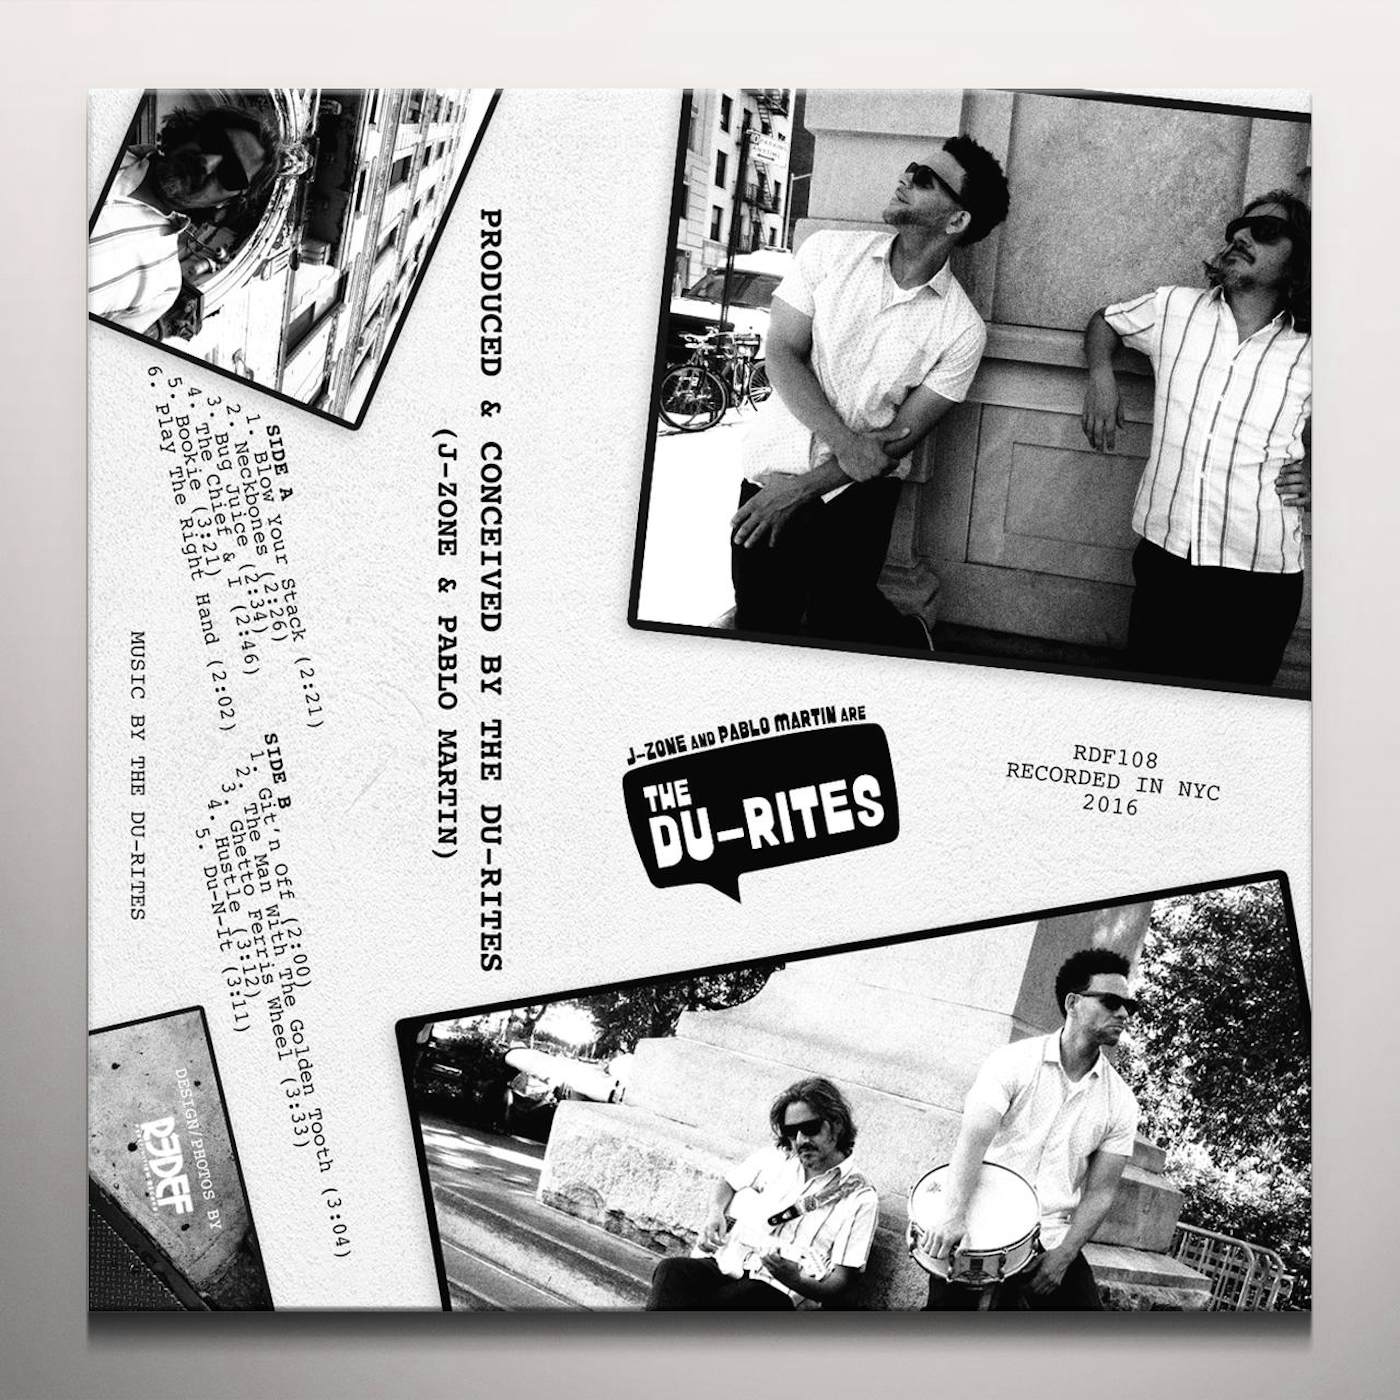 J-Zone And Pablo Martin Are The Du-Rites Vinyl Record